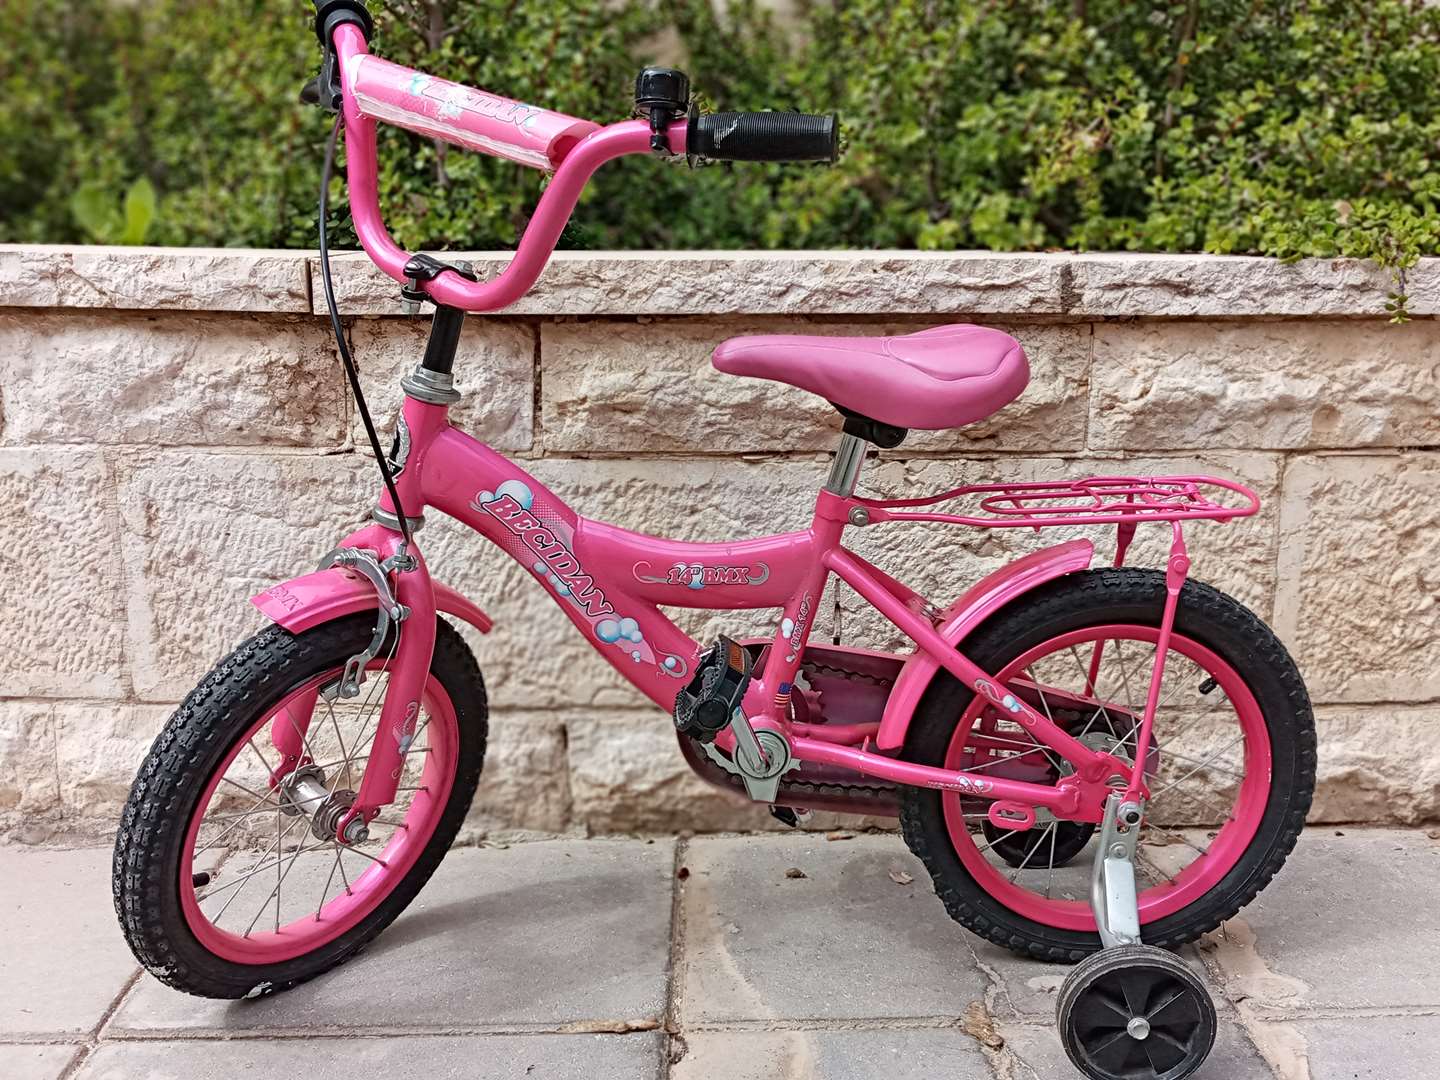 hang Celsius consonant אופני ילדים למכירה בבאר שבע 150 שח | אופניים - אופני ילדים | לוח יד שניה  הומלס